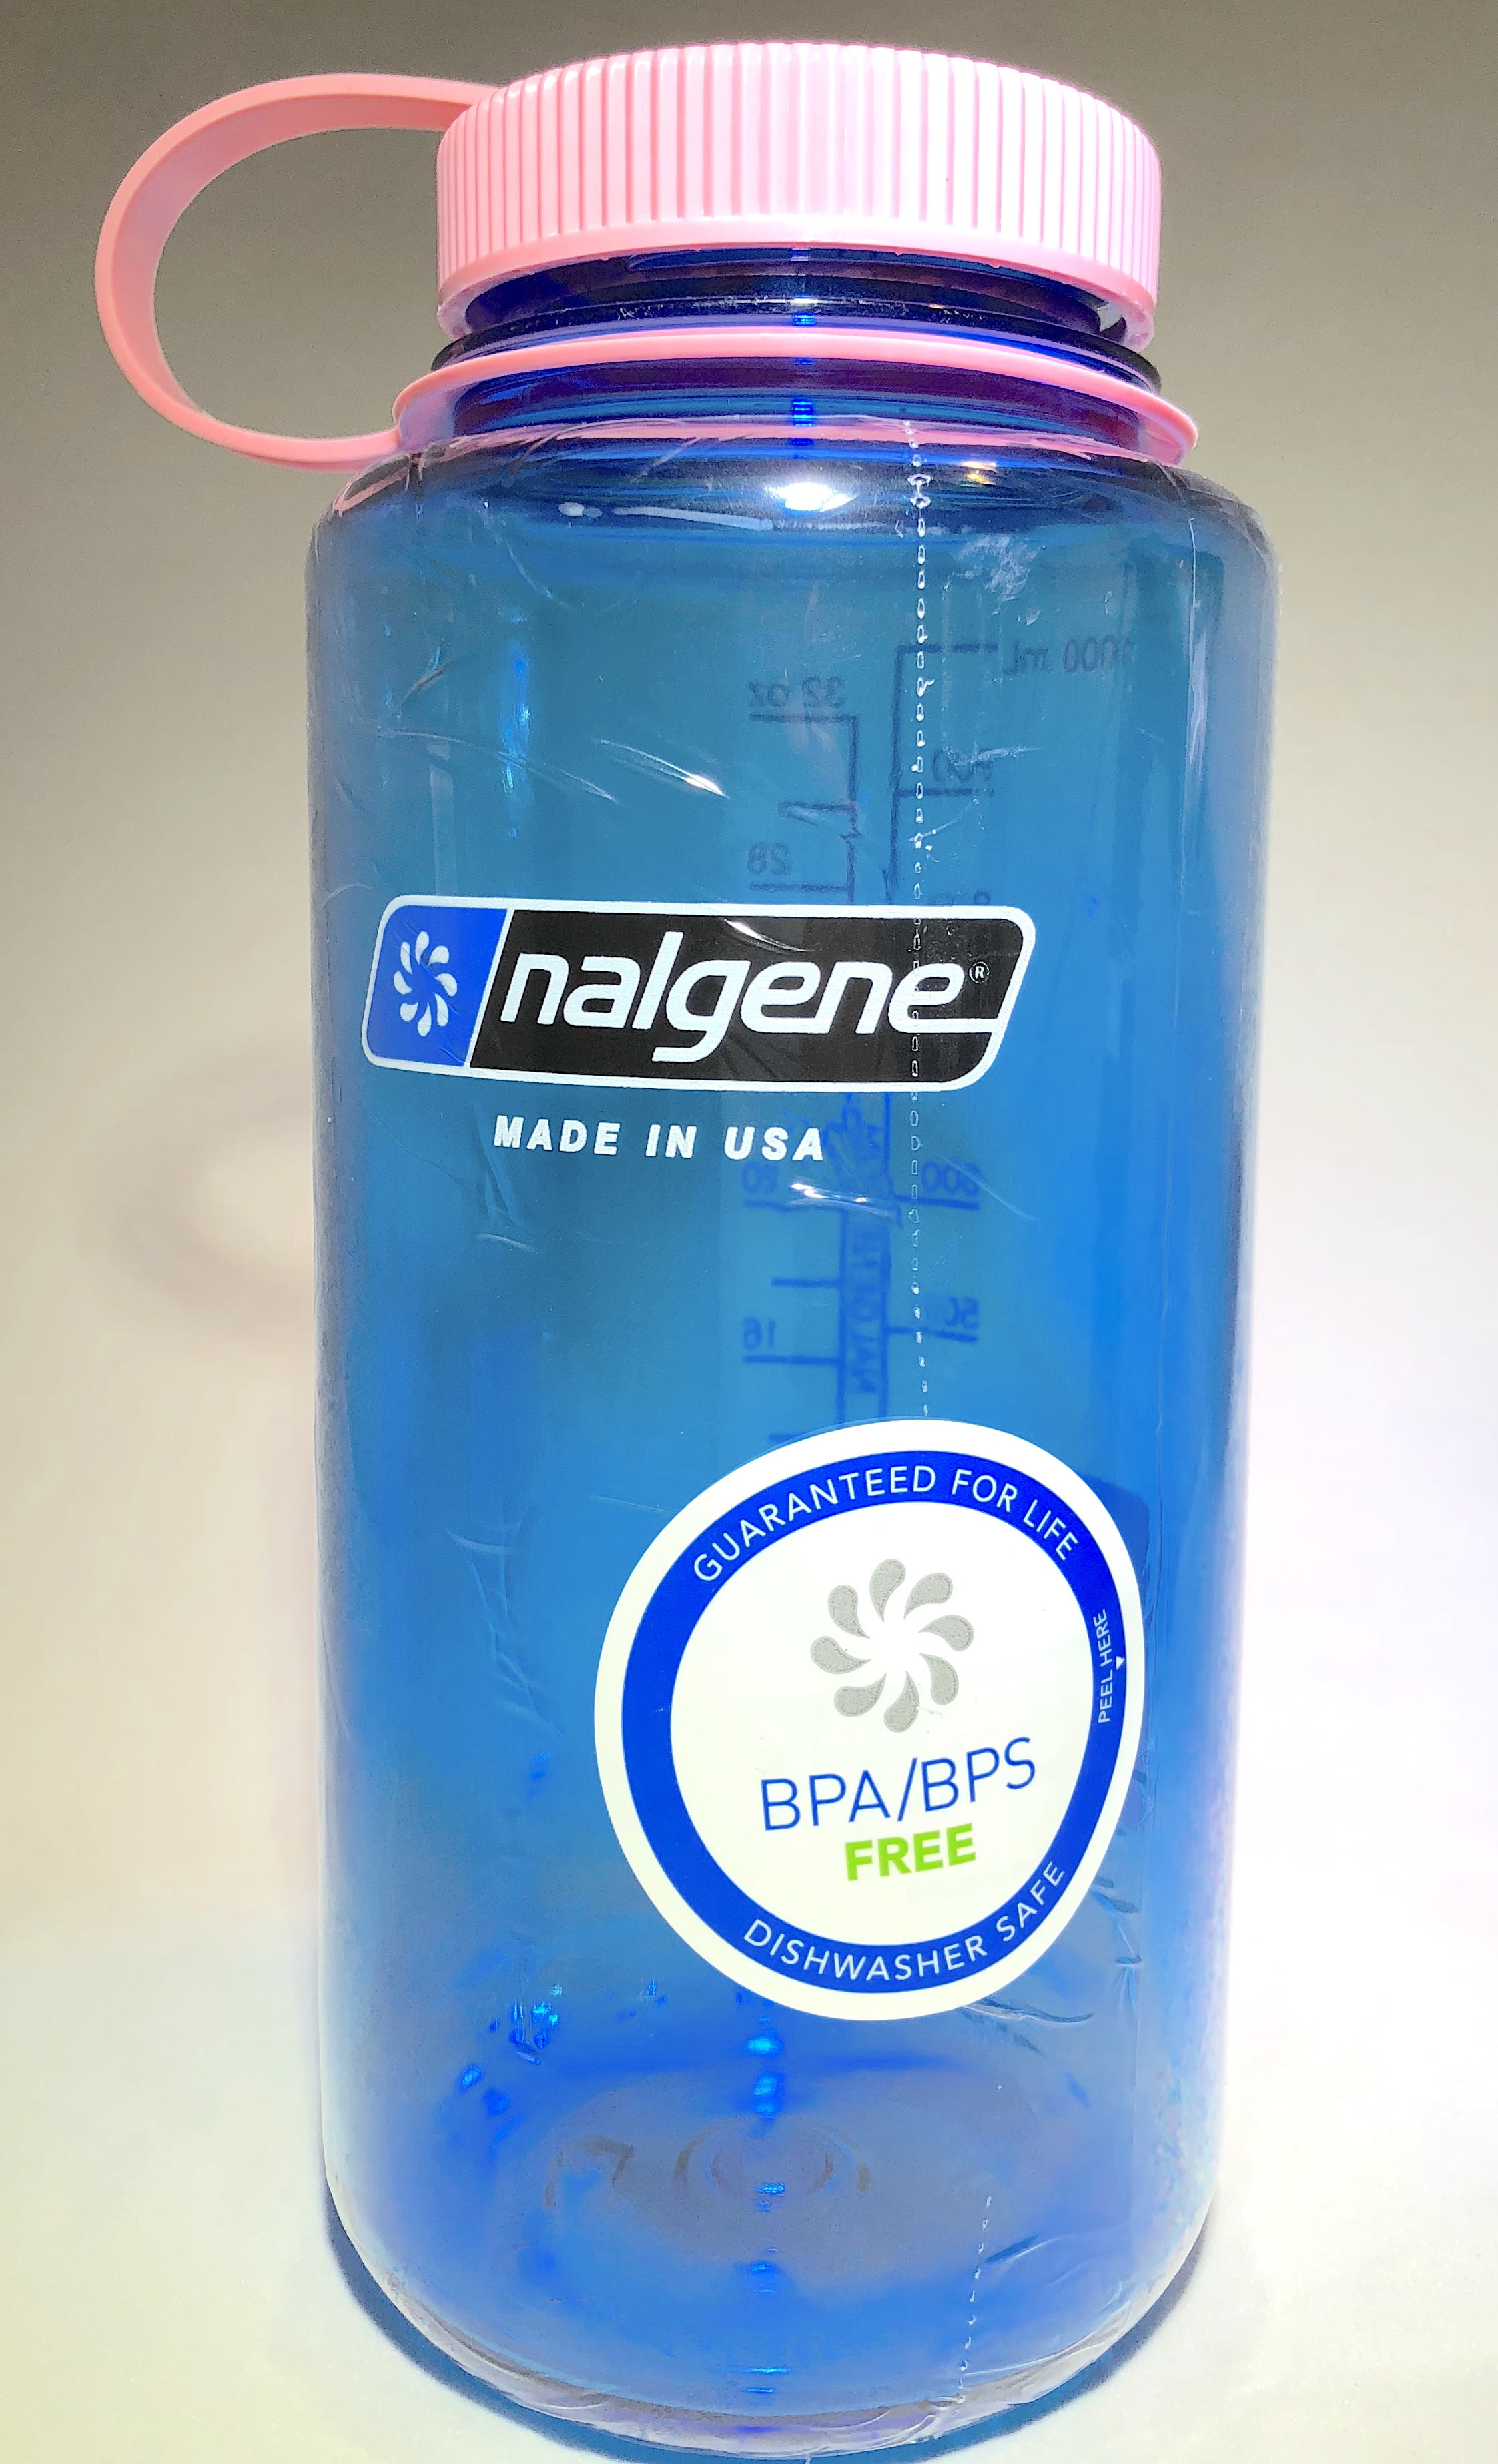 Nalgene 32-Oz. Water Bottle Blue 4004001 - Best Buy